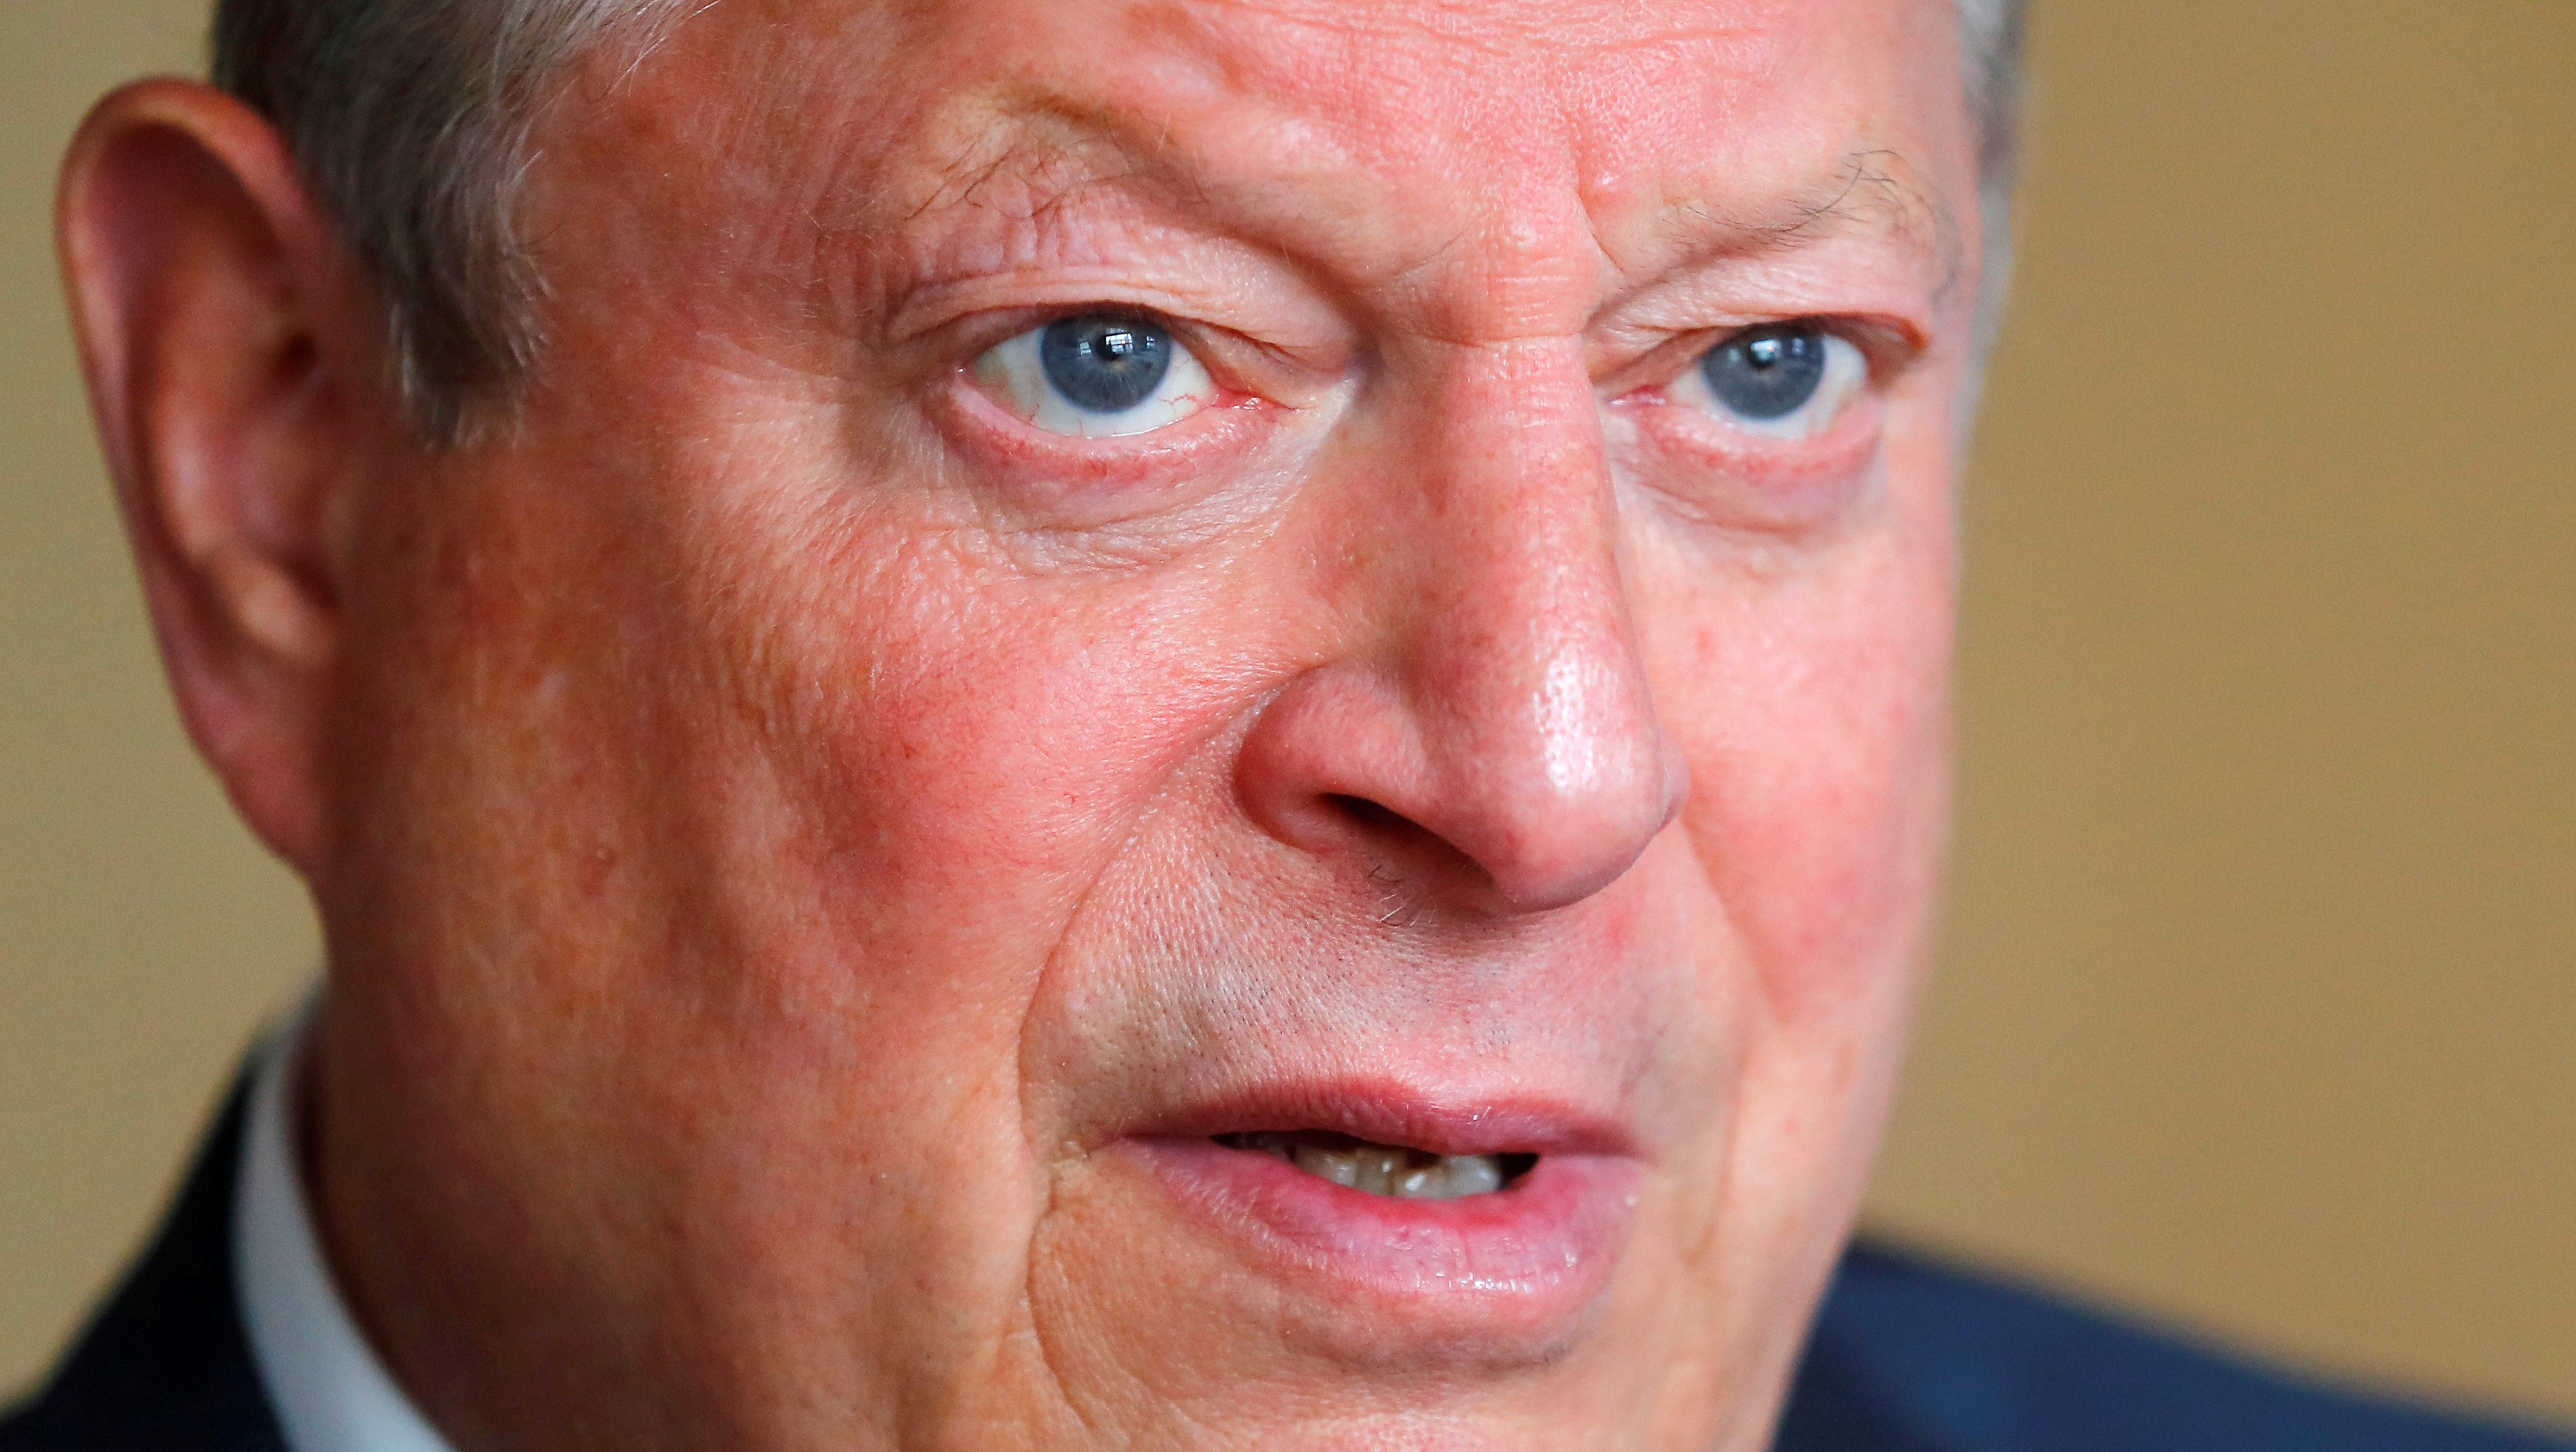 Democratic former vice president of the US, Al Gore, who criticised Donald Trump